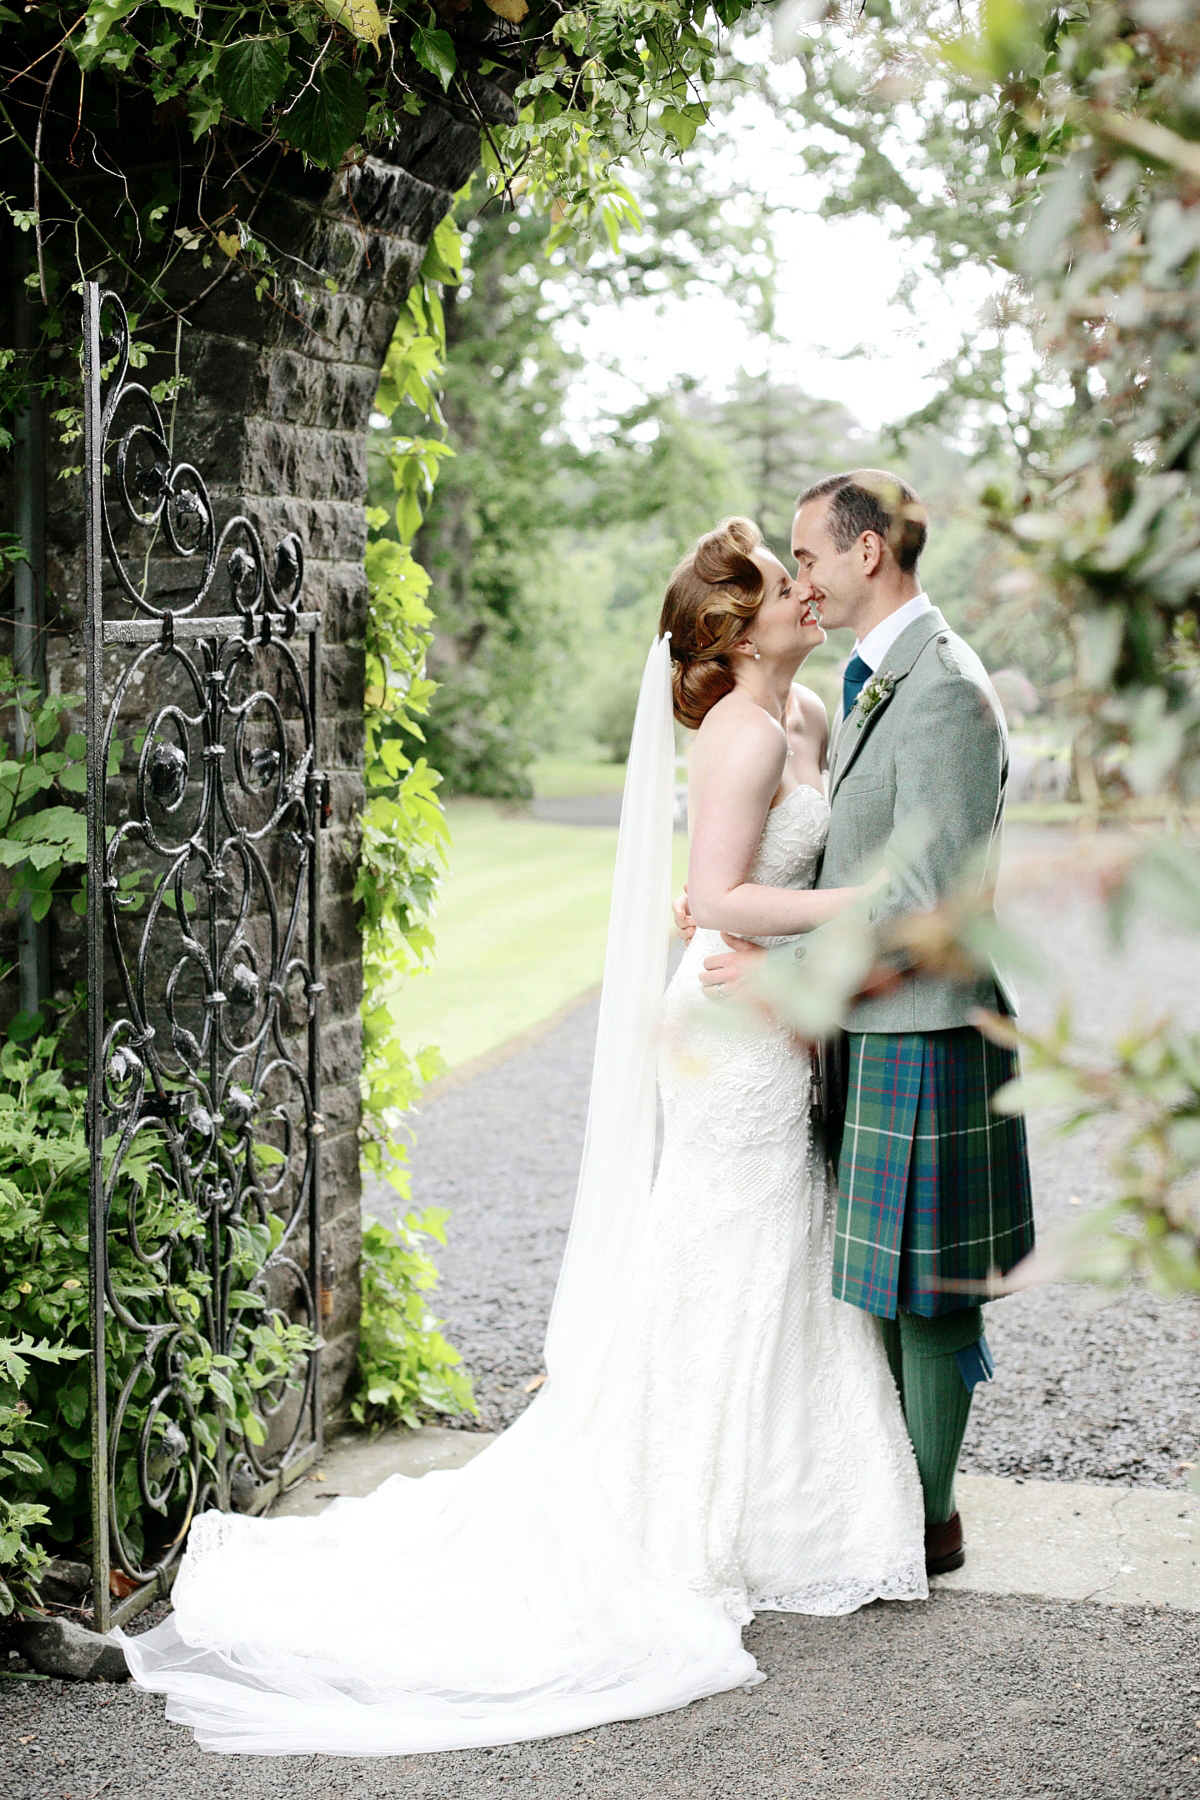 watters dress walled garden wedding scotland dasha caffrey photography 62 1